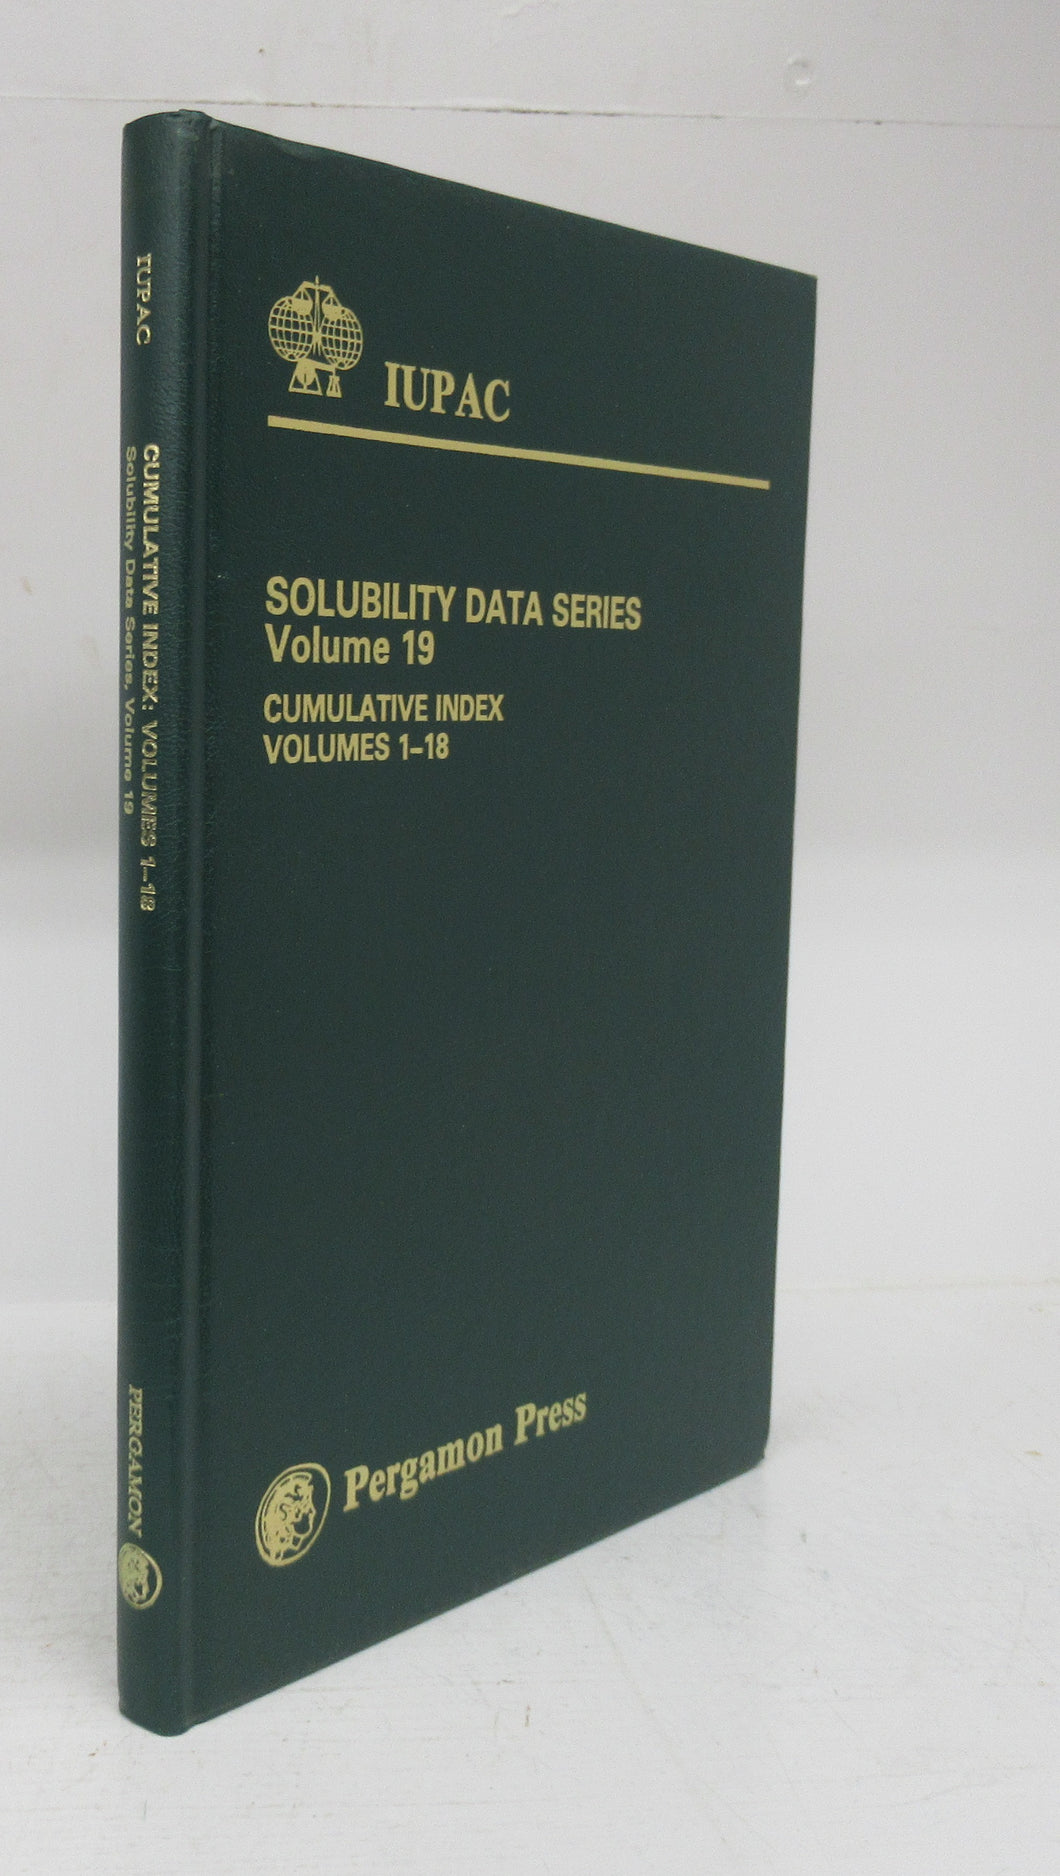 Solubility Data Series Cumulative Index Volumes 1-18